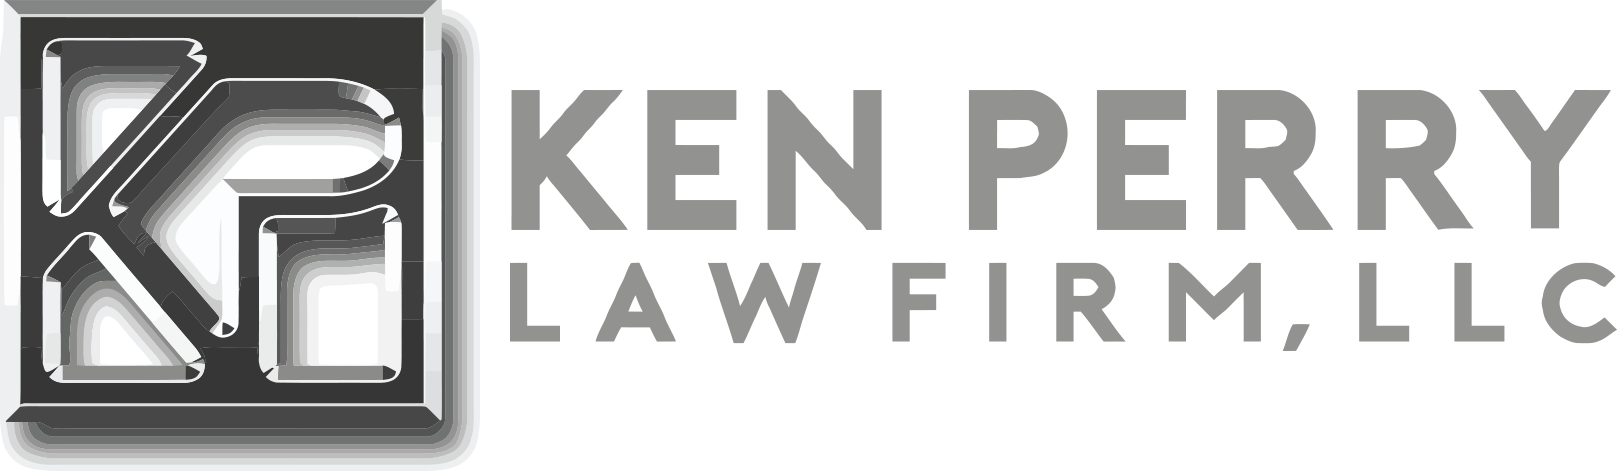 Ken Perry Law Firm, LLC